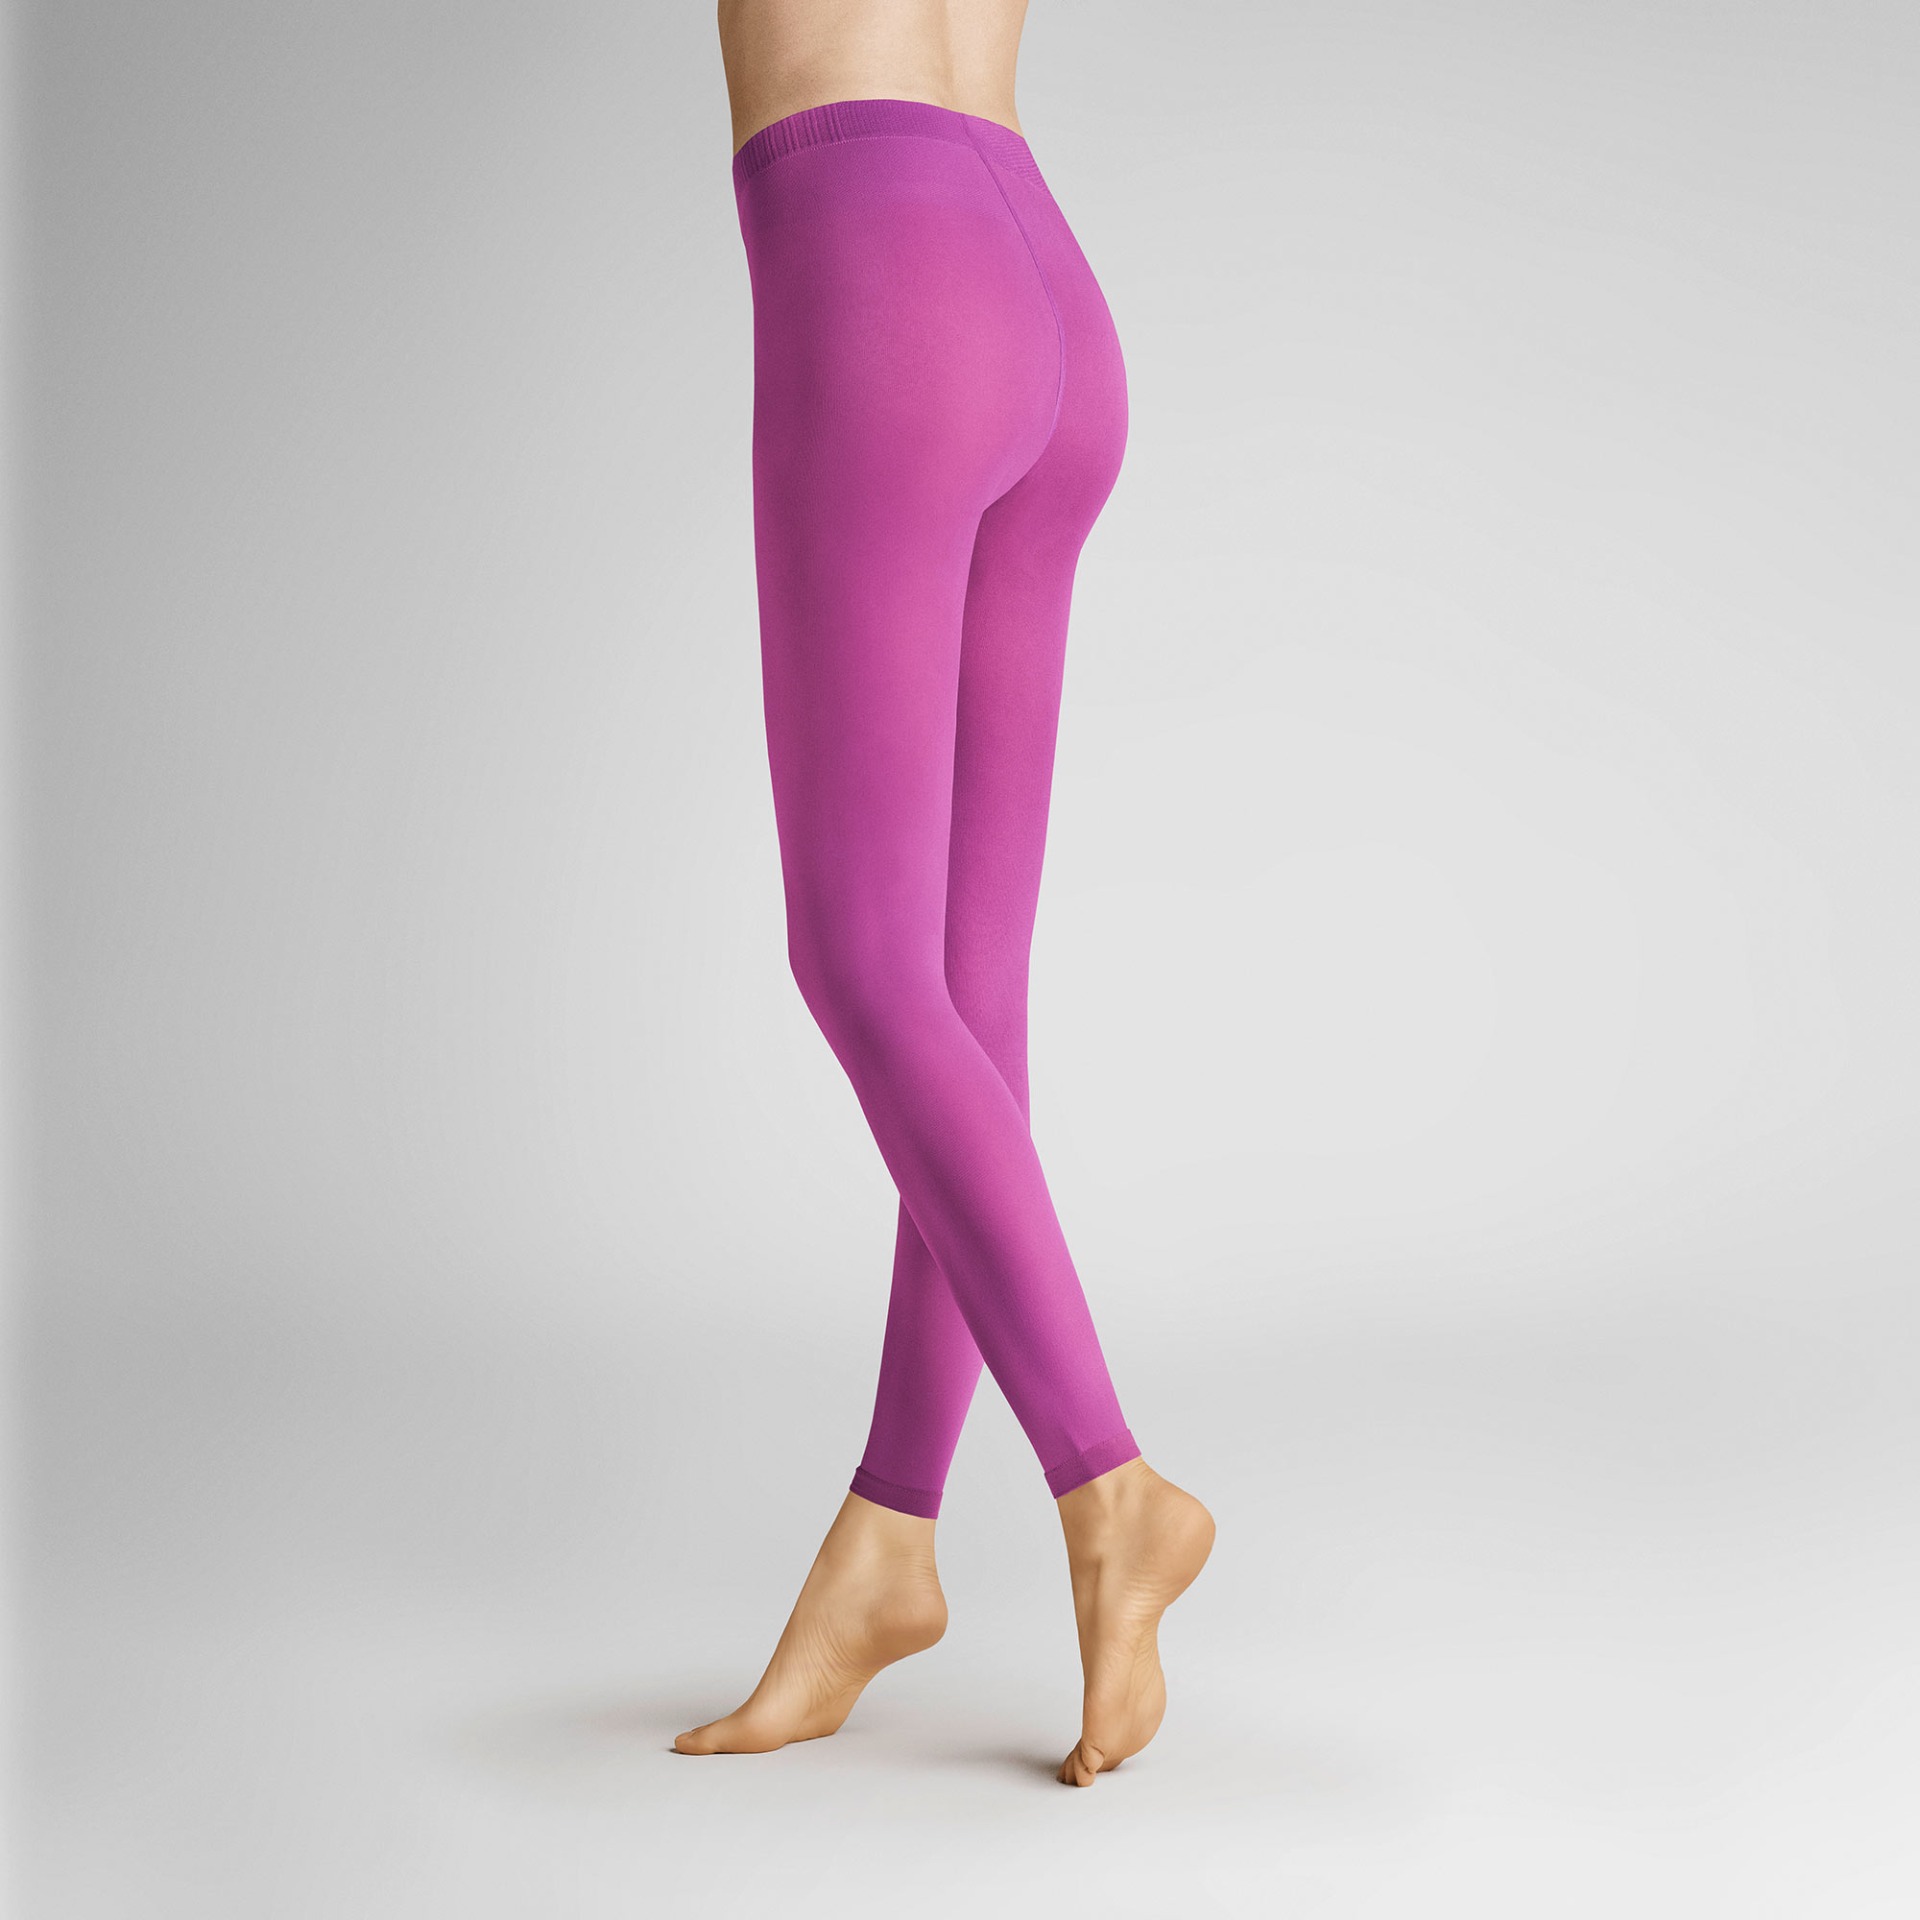 HUDSON Damen MICRO 50 -  40/42 - Semi-blickdichte Leggings mit ebenmäßiger Optik - Fuxia 0103 (Pink/Violett)